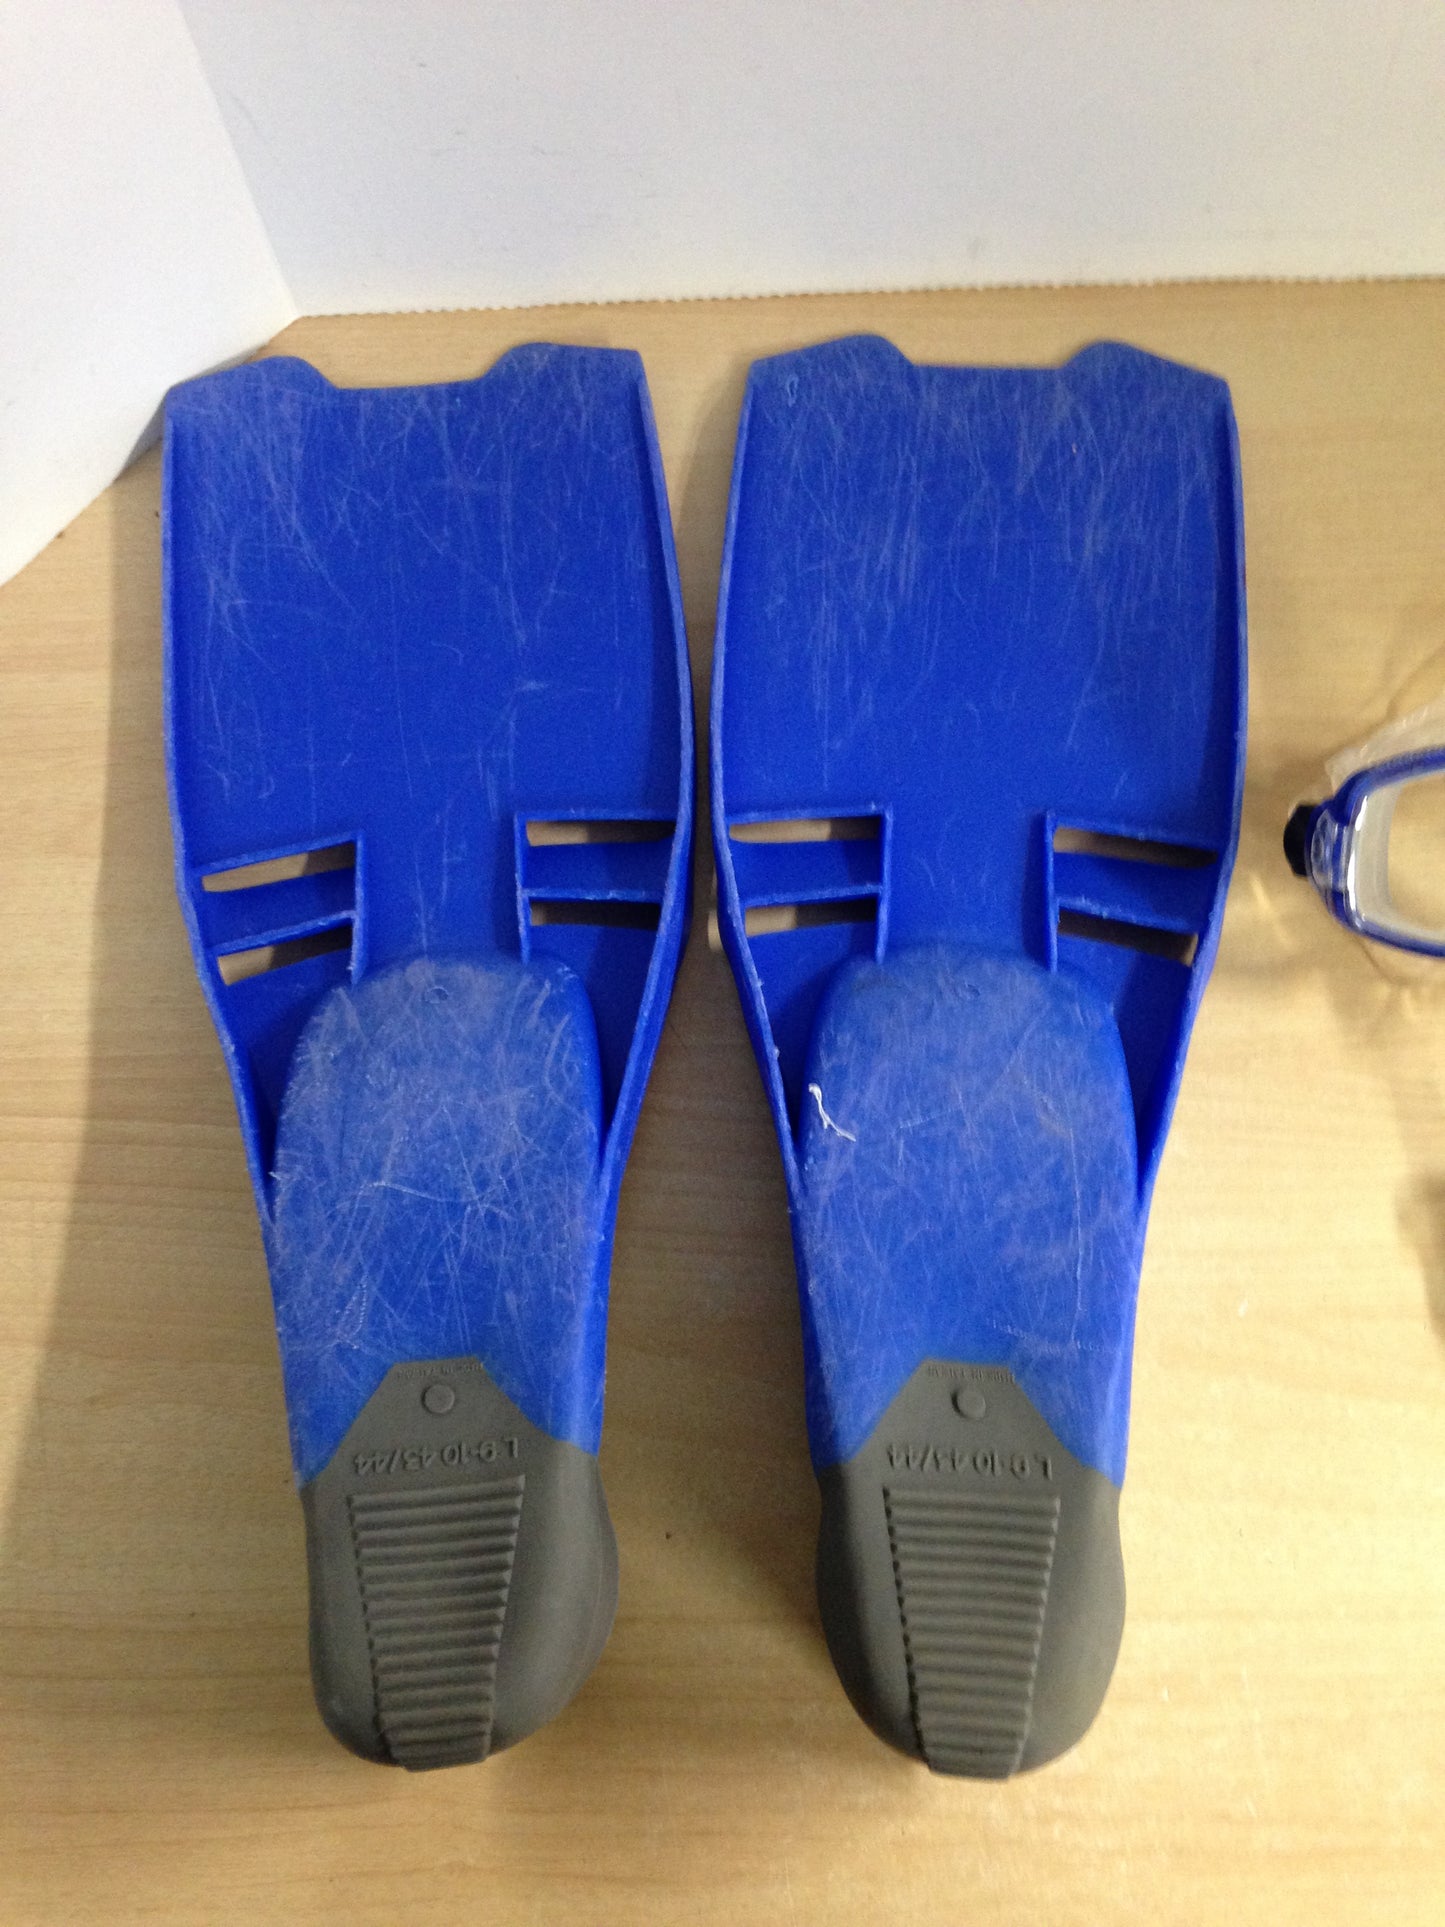 Snorkel Dive Fins Set Ladies Size 9-10 Shoe Dive Gear and Others Grey Blue